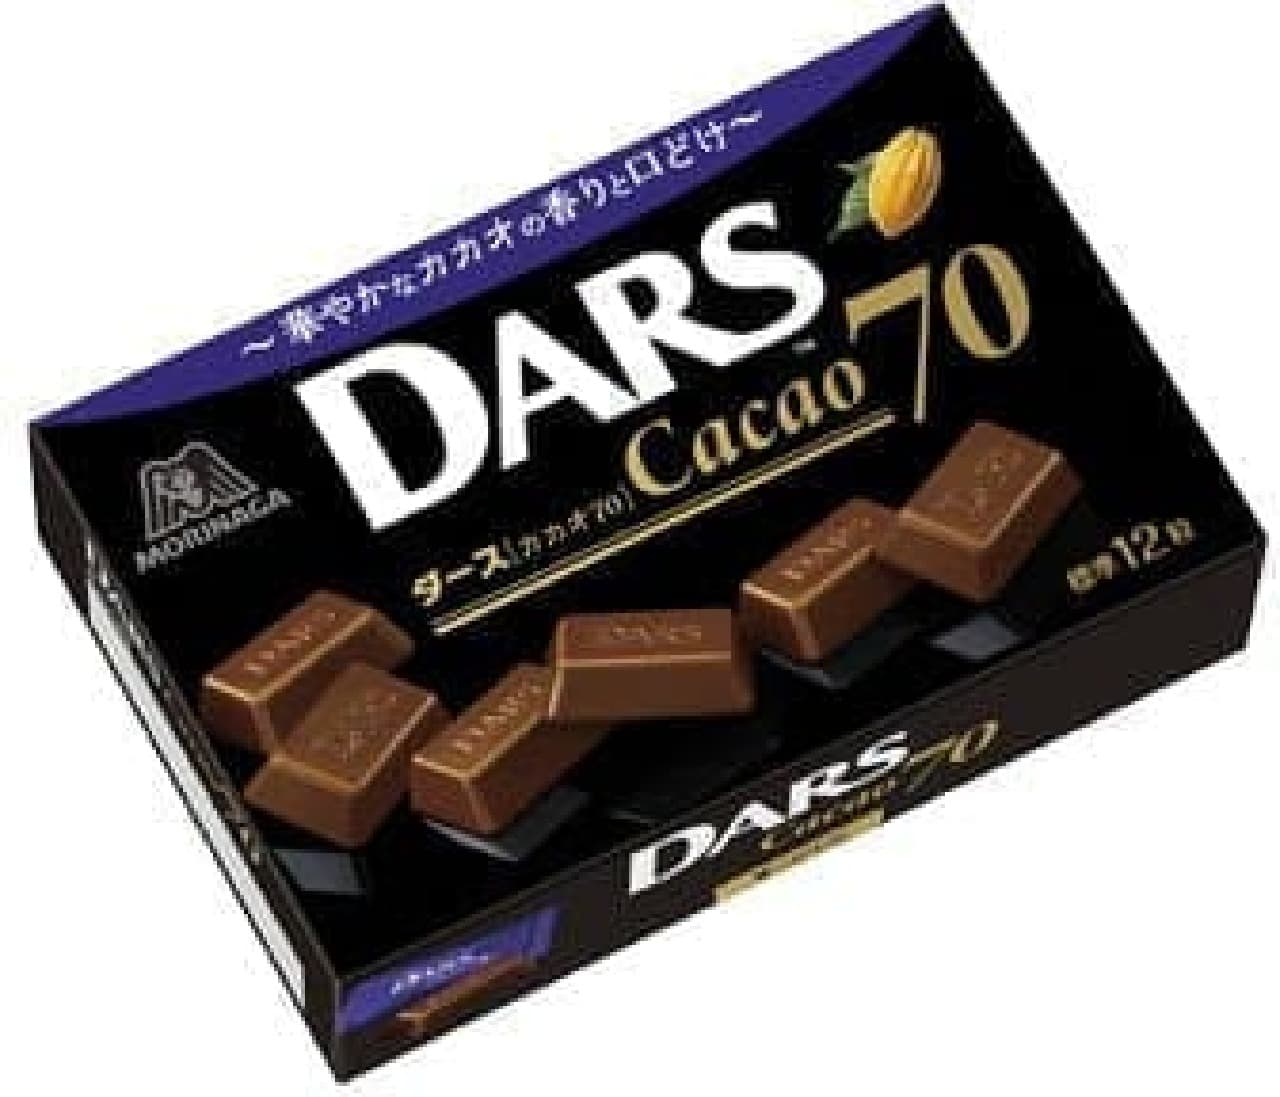 Morinaga & Co., Ltd. "Darth [Cacao 70]"